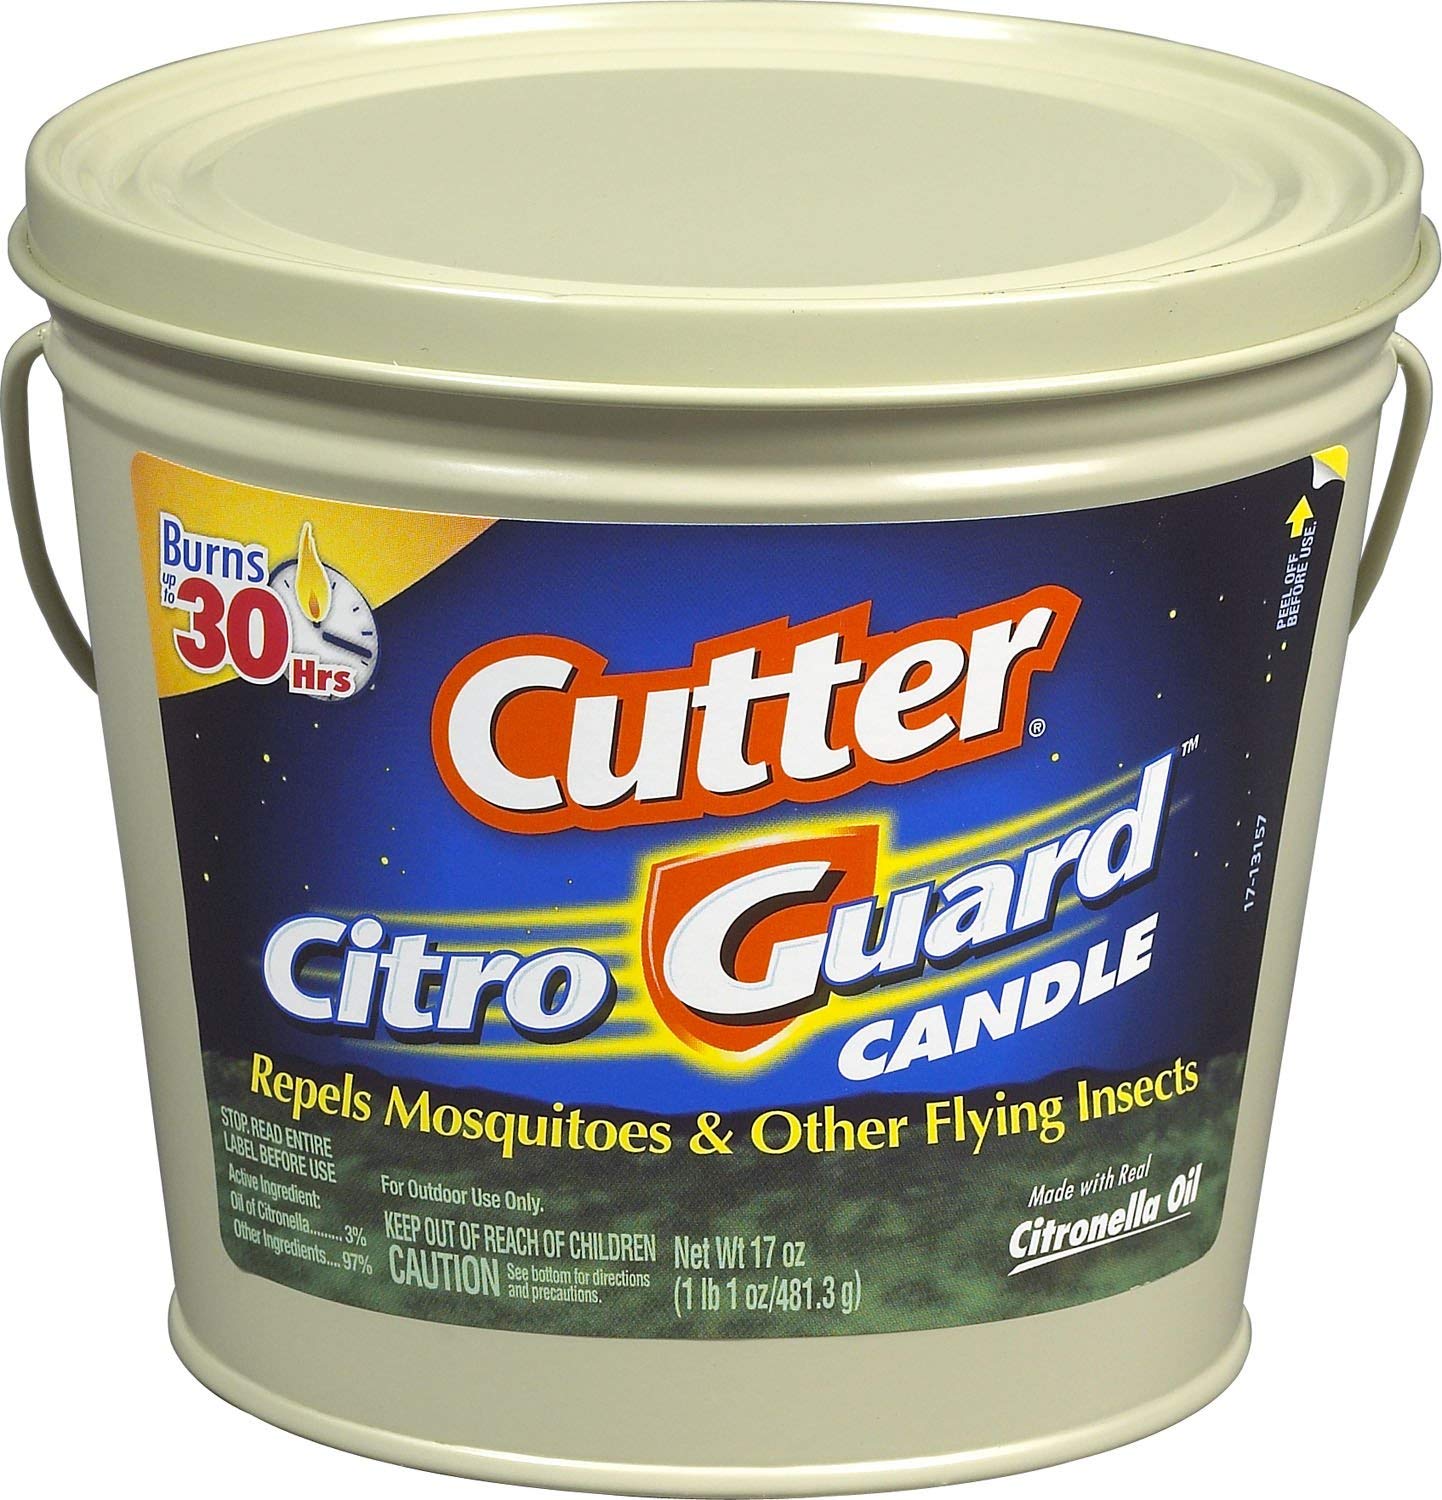 Cutter Citro Guard Candle